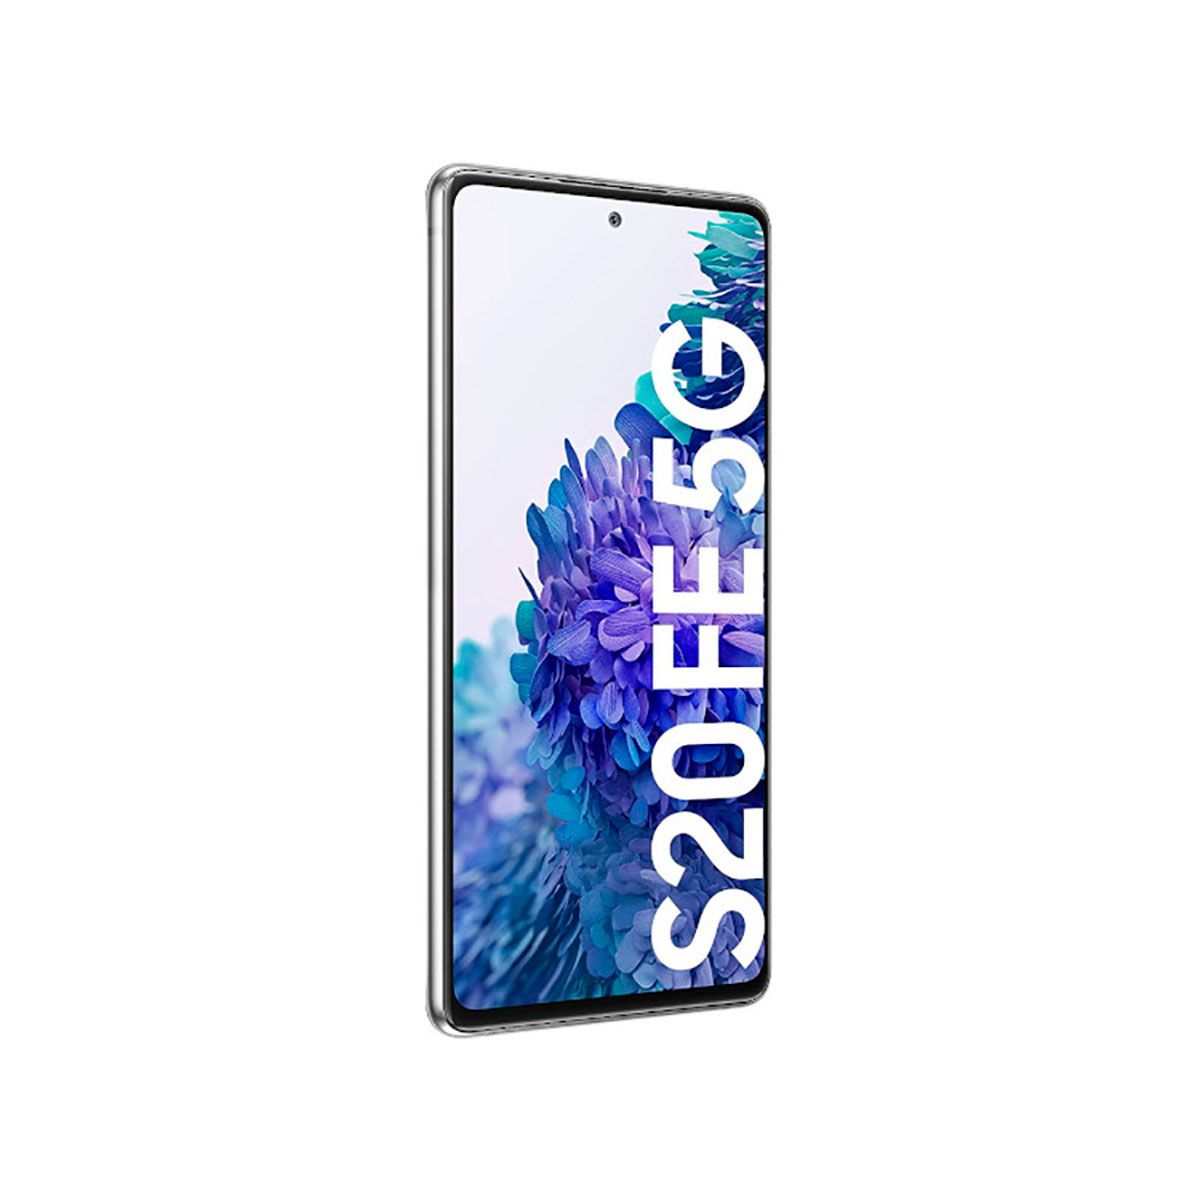 Samsung Galaxy S20 FE 5G 6GB/128GB White (Cloud White) Dual SIM G781